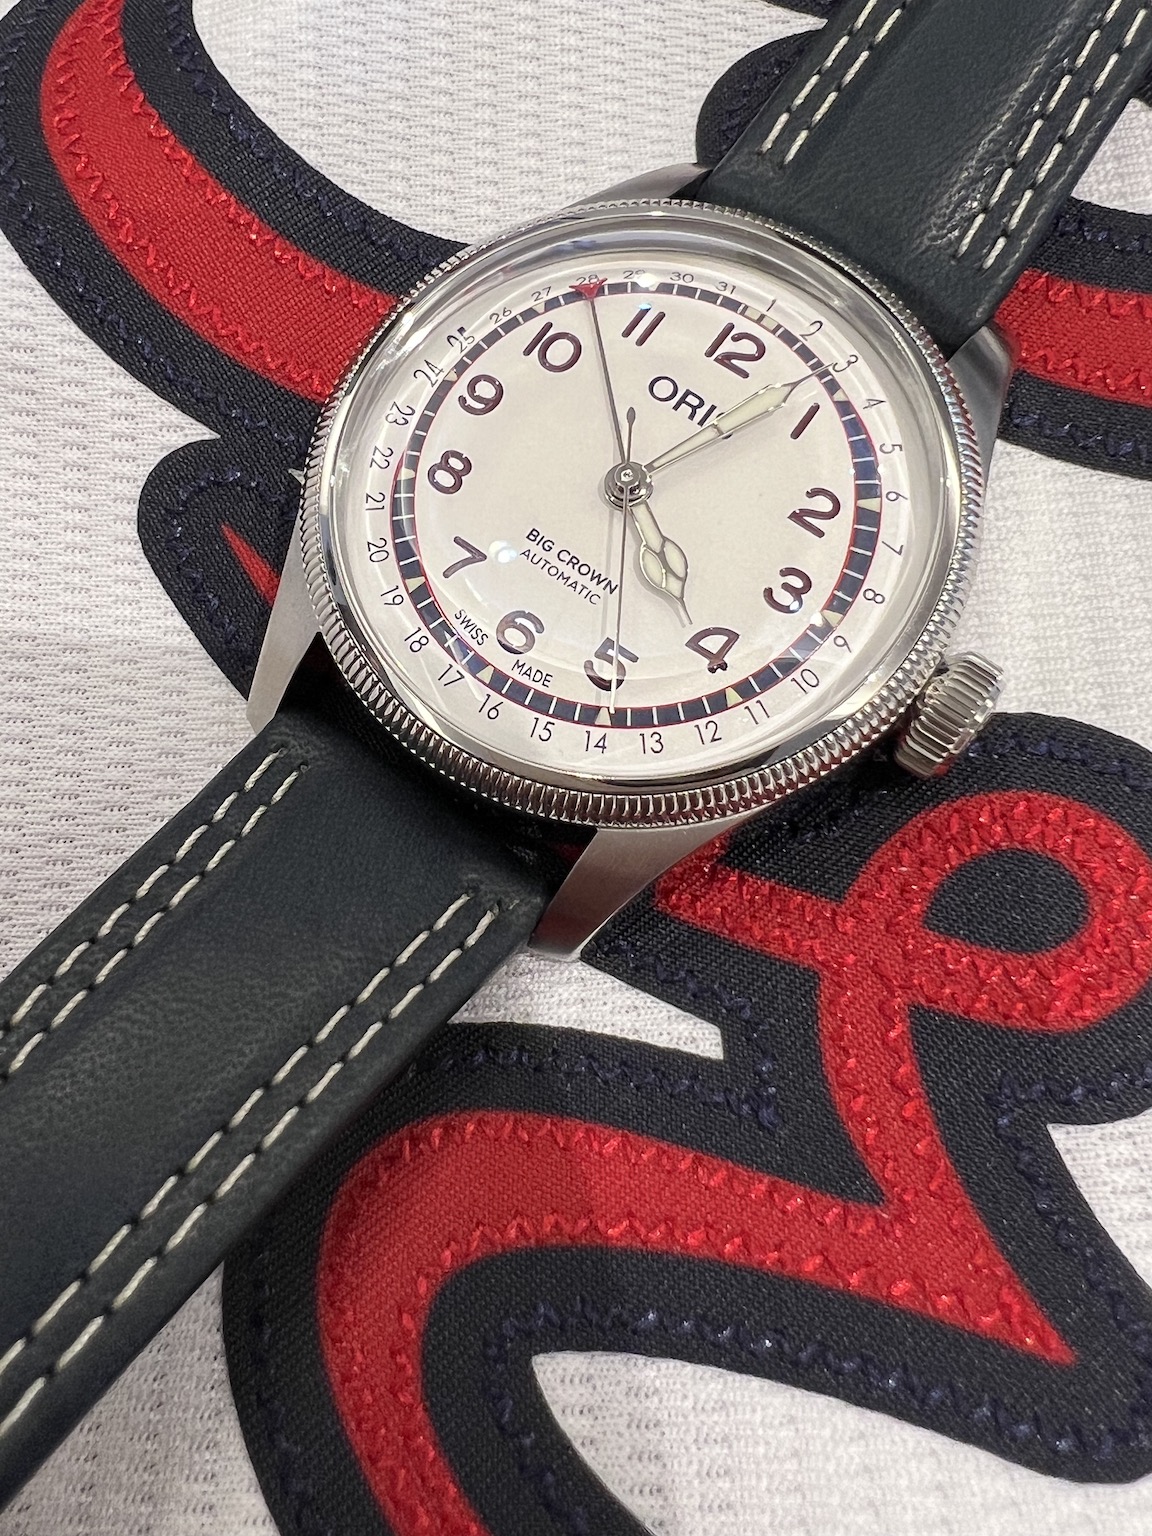 Oris Big Crown Hank Aaron limited edition watch. 